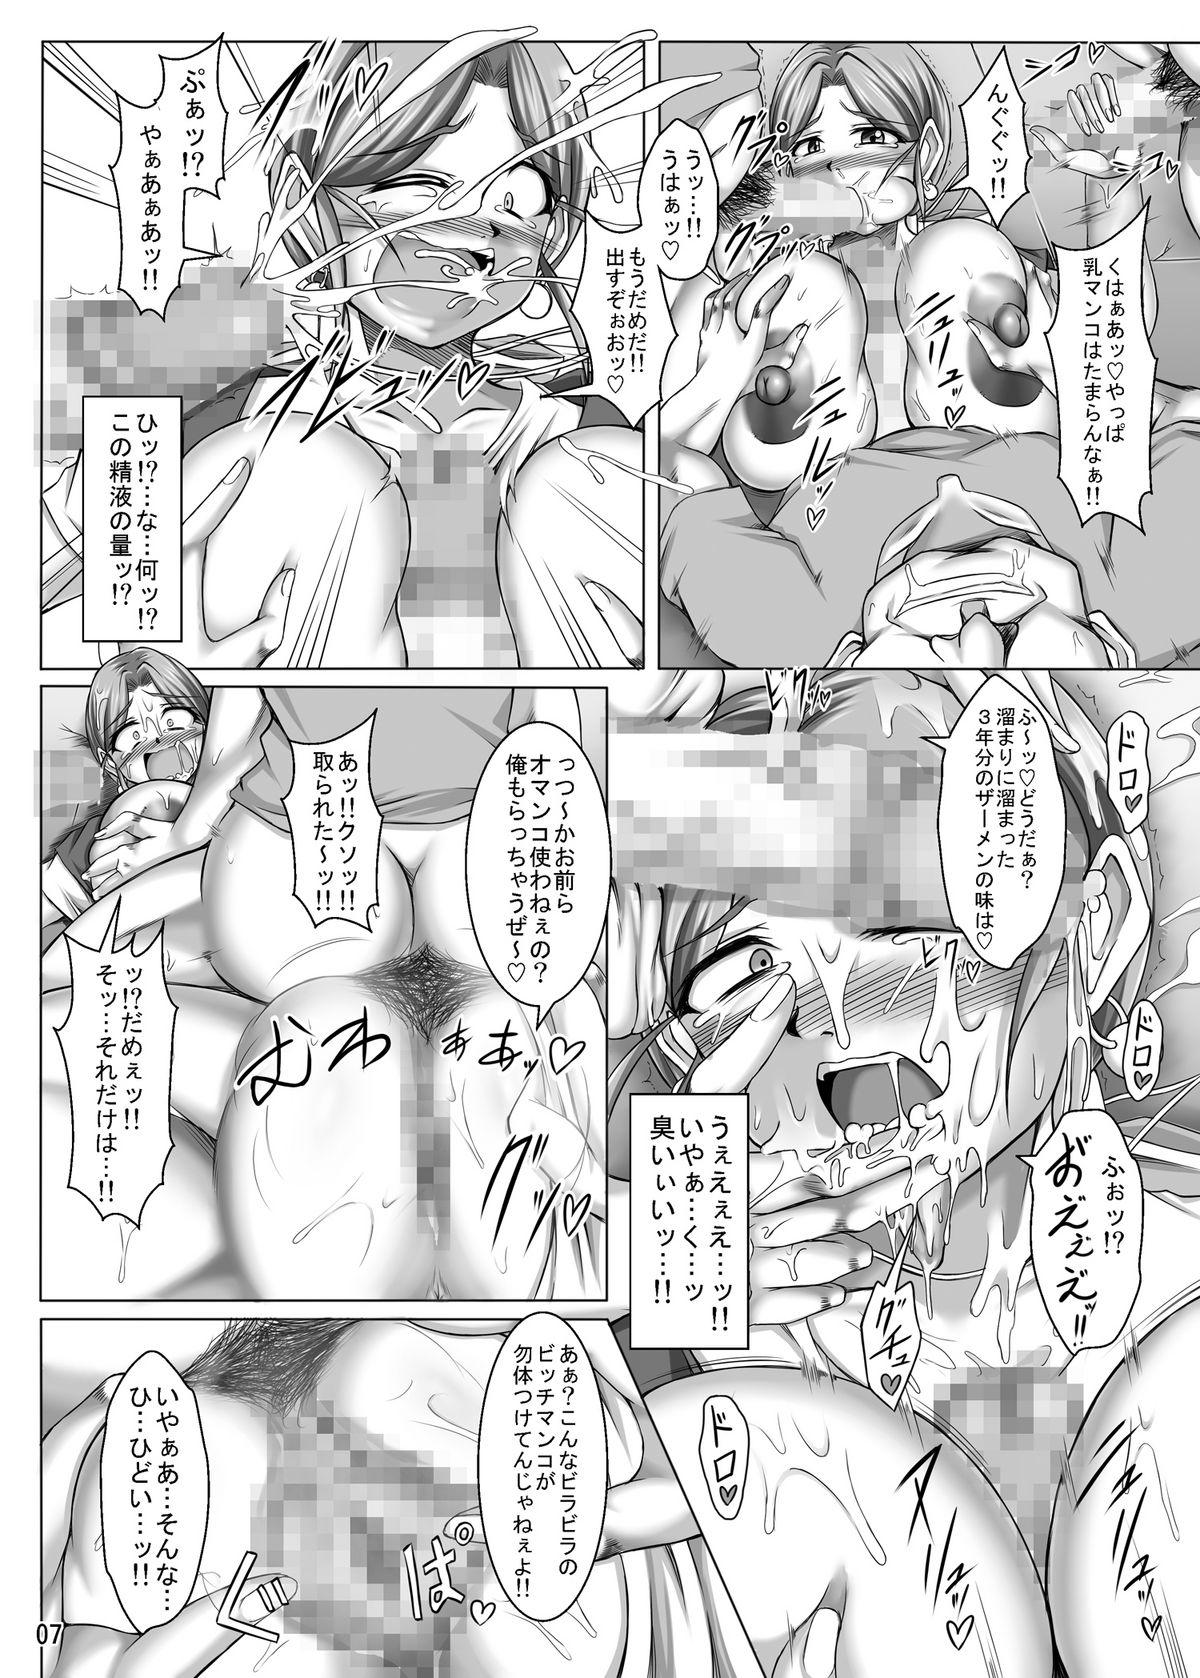 Mmd Toruneko Fujin Nene 37 Dannani himitsu no rougoku sontsukuri - Dragon quest iv 18 Year Old - Page 7